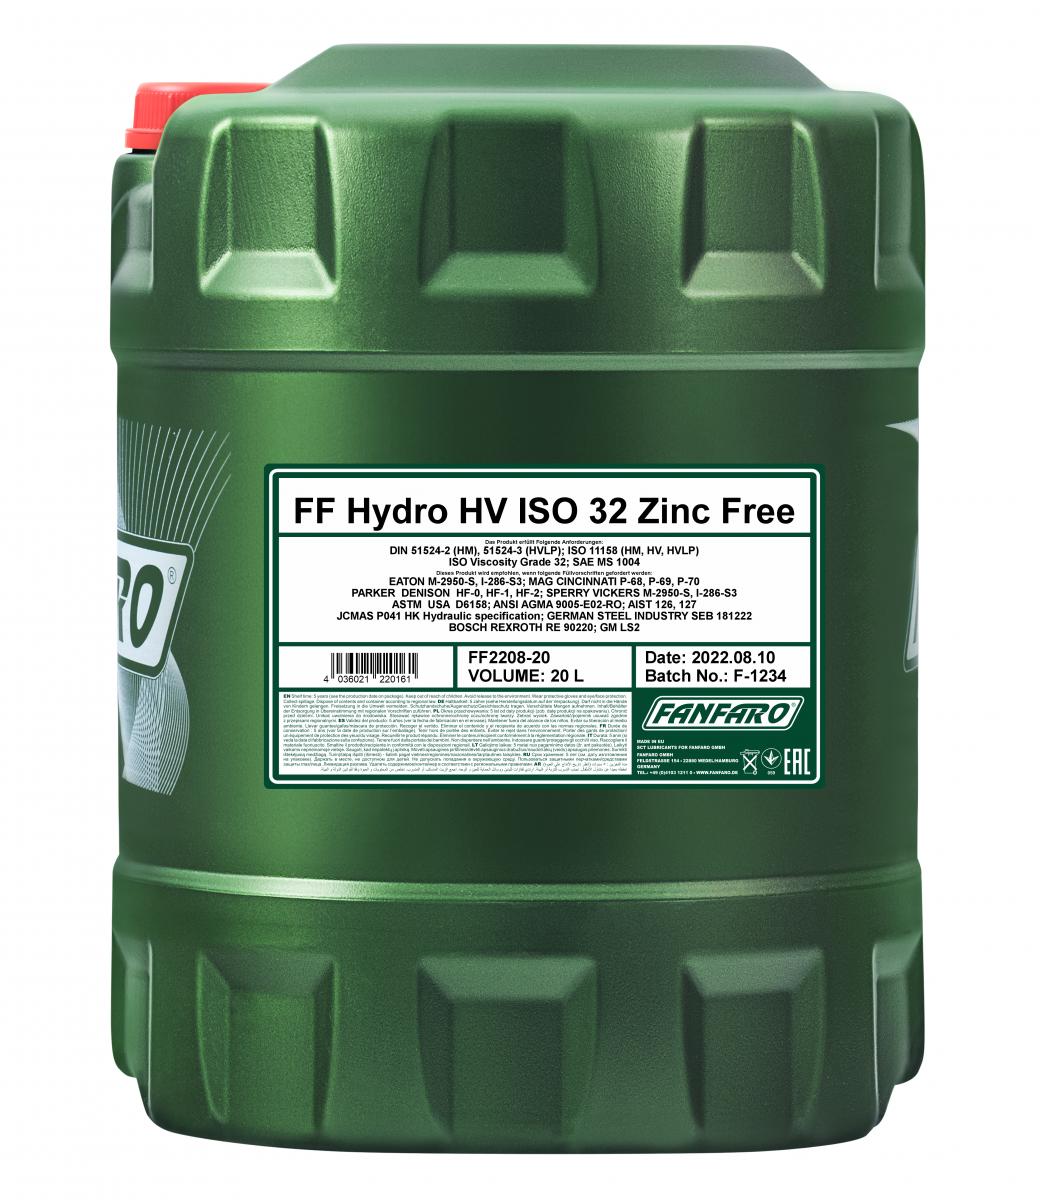 FF Hydro HV ISO 32 Zinc Free